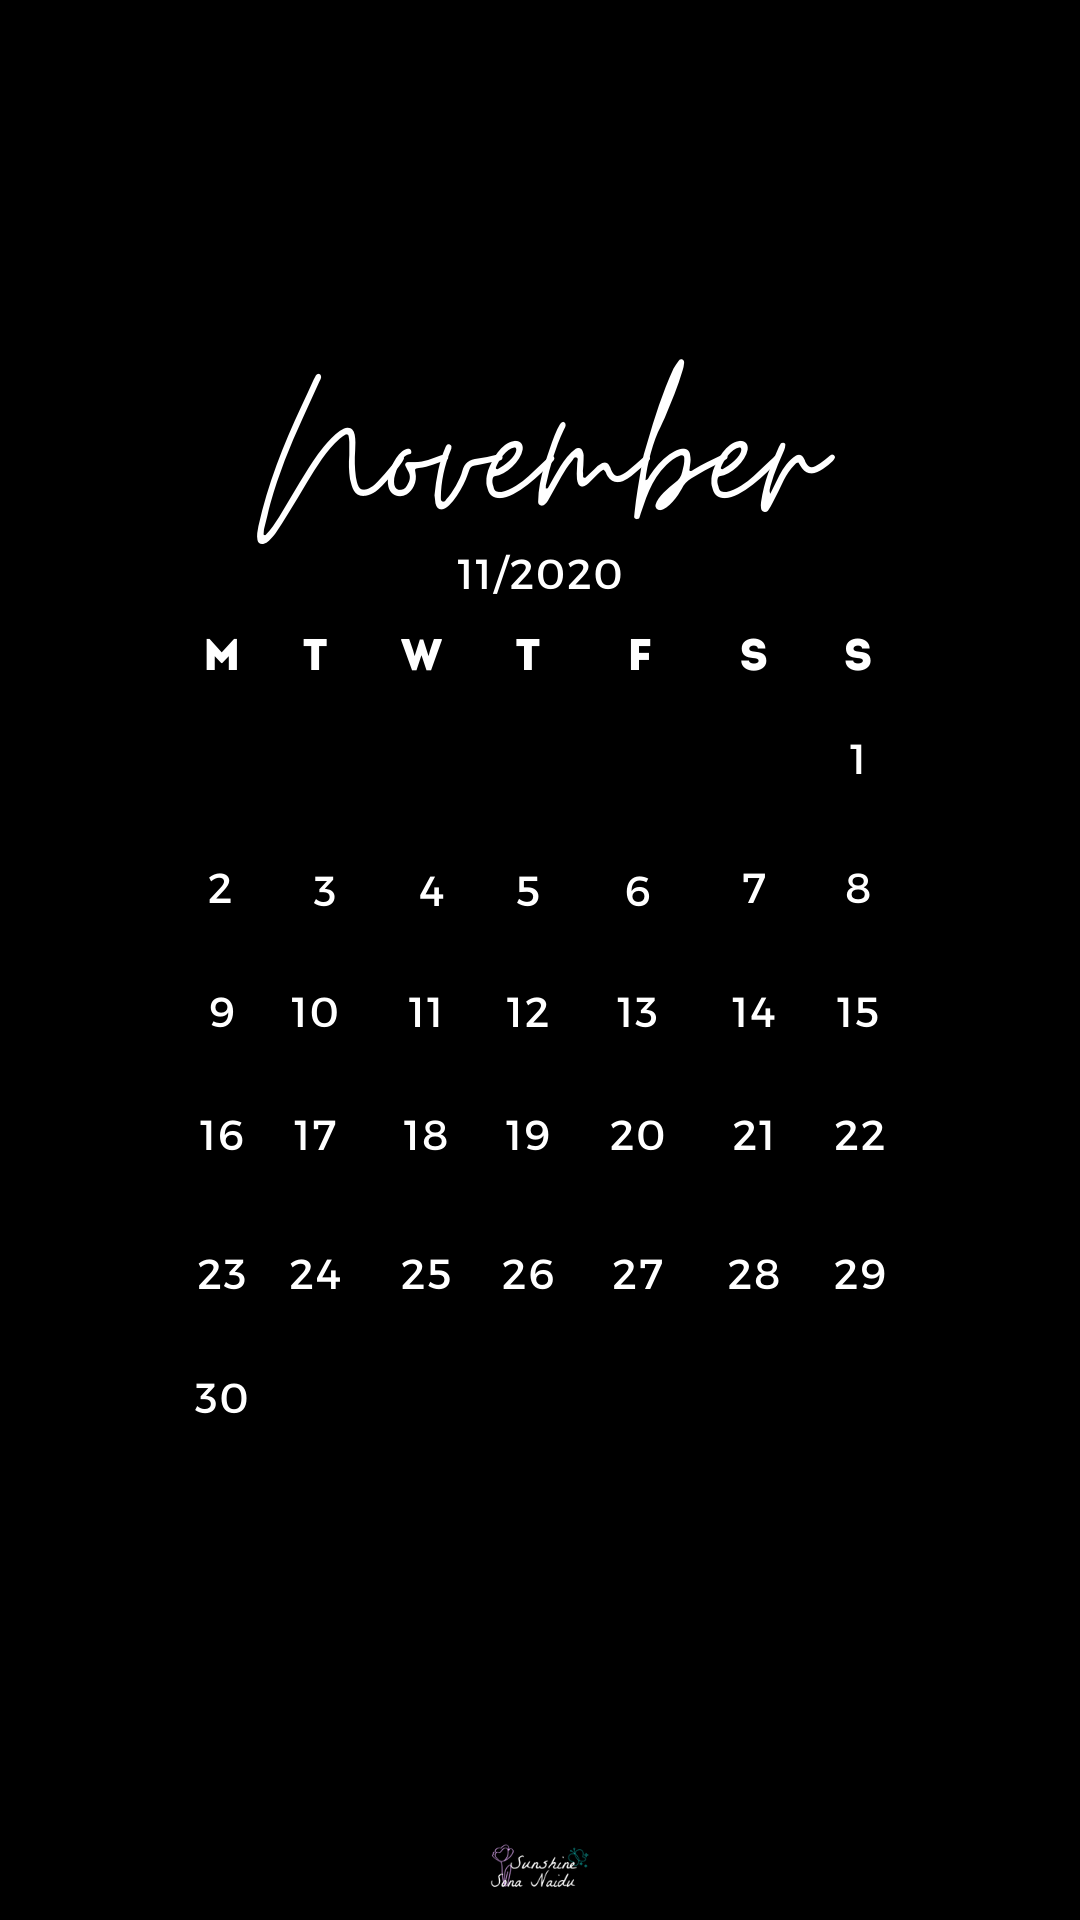 November 2020 wallpaper. Calendar wallpaper, November wallpaper, Cute patterns wallpaper